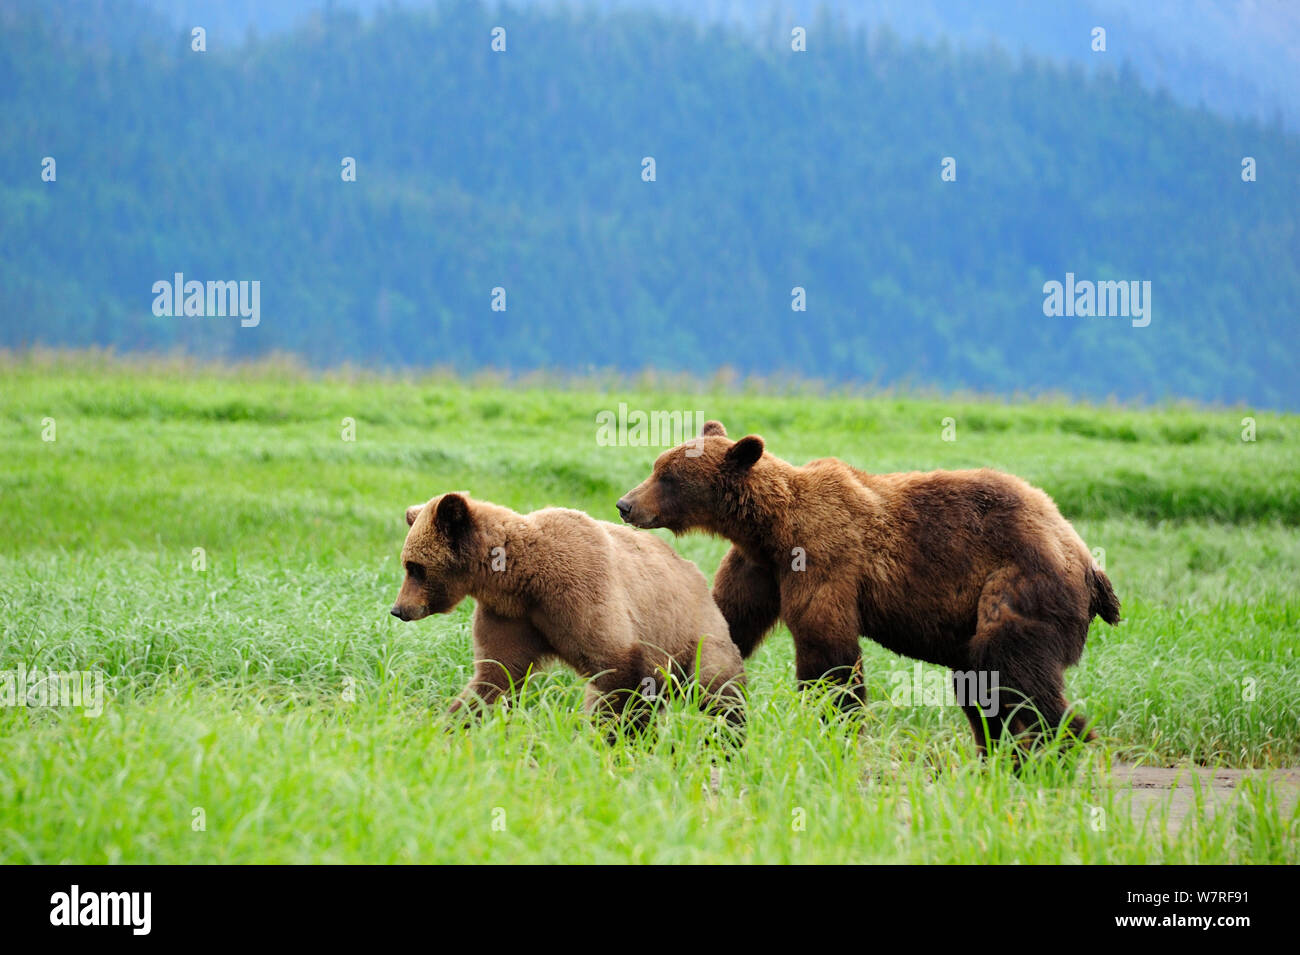 Maschio e femmina di orso grizzly corteggiamento (Ursus arctos horribilis) Khutzeymateen Orso grizzly Santuario, British Columbia, Canada, a giugno. Foto Stock